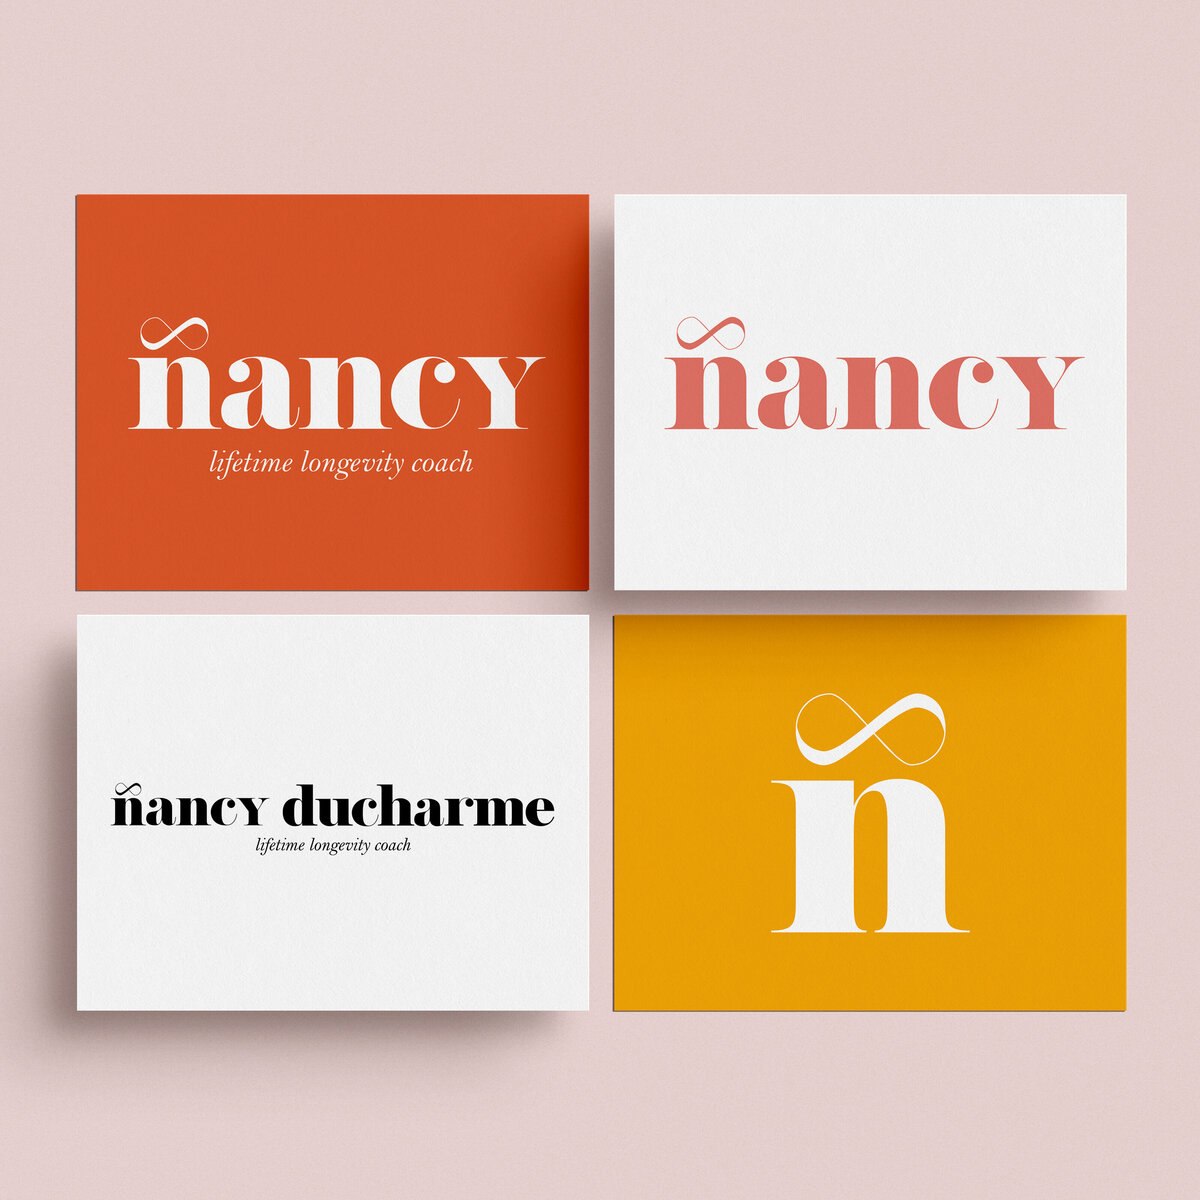 Nancy Logos 2 alt